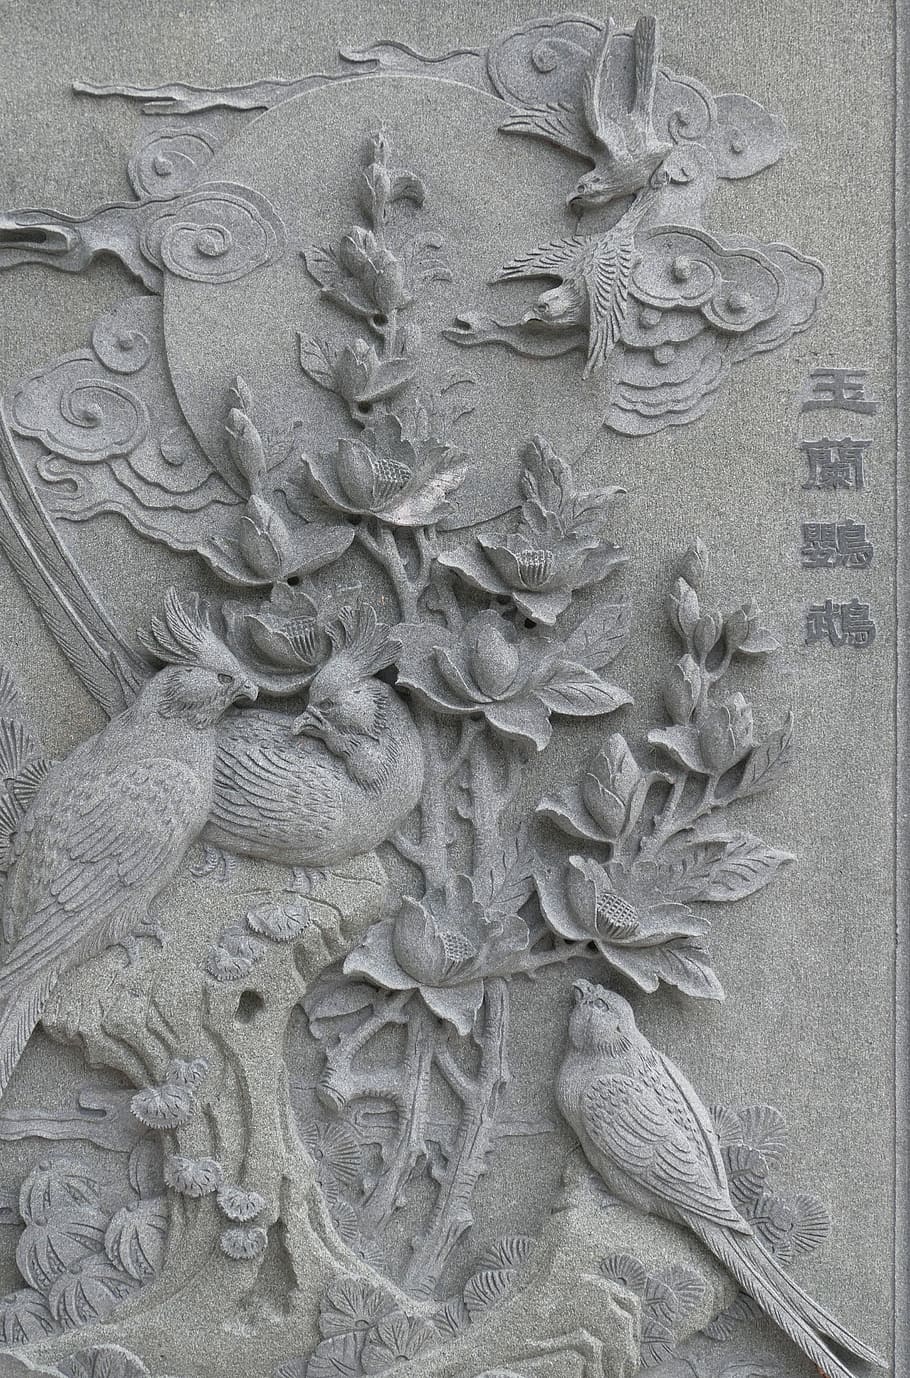 Taiwan, Image, Relief, Buddhism, China, taoism, temple, figure, bird, nest